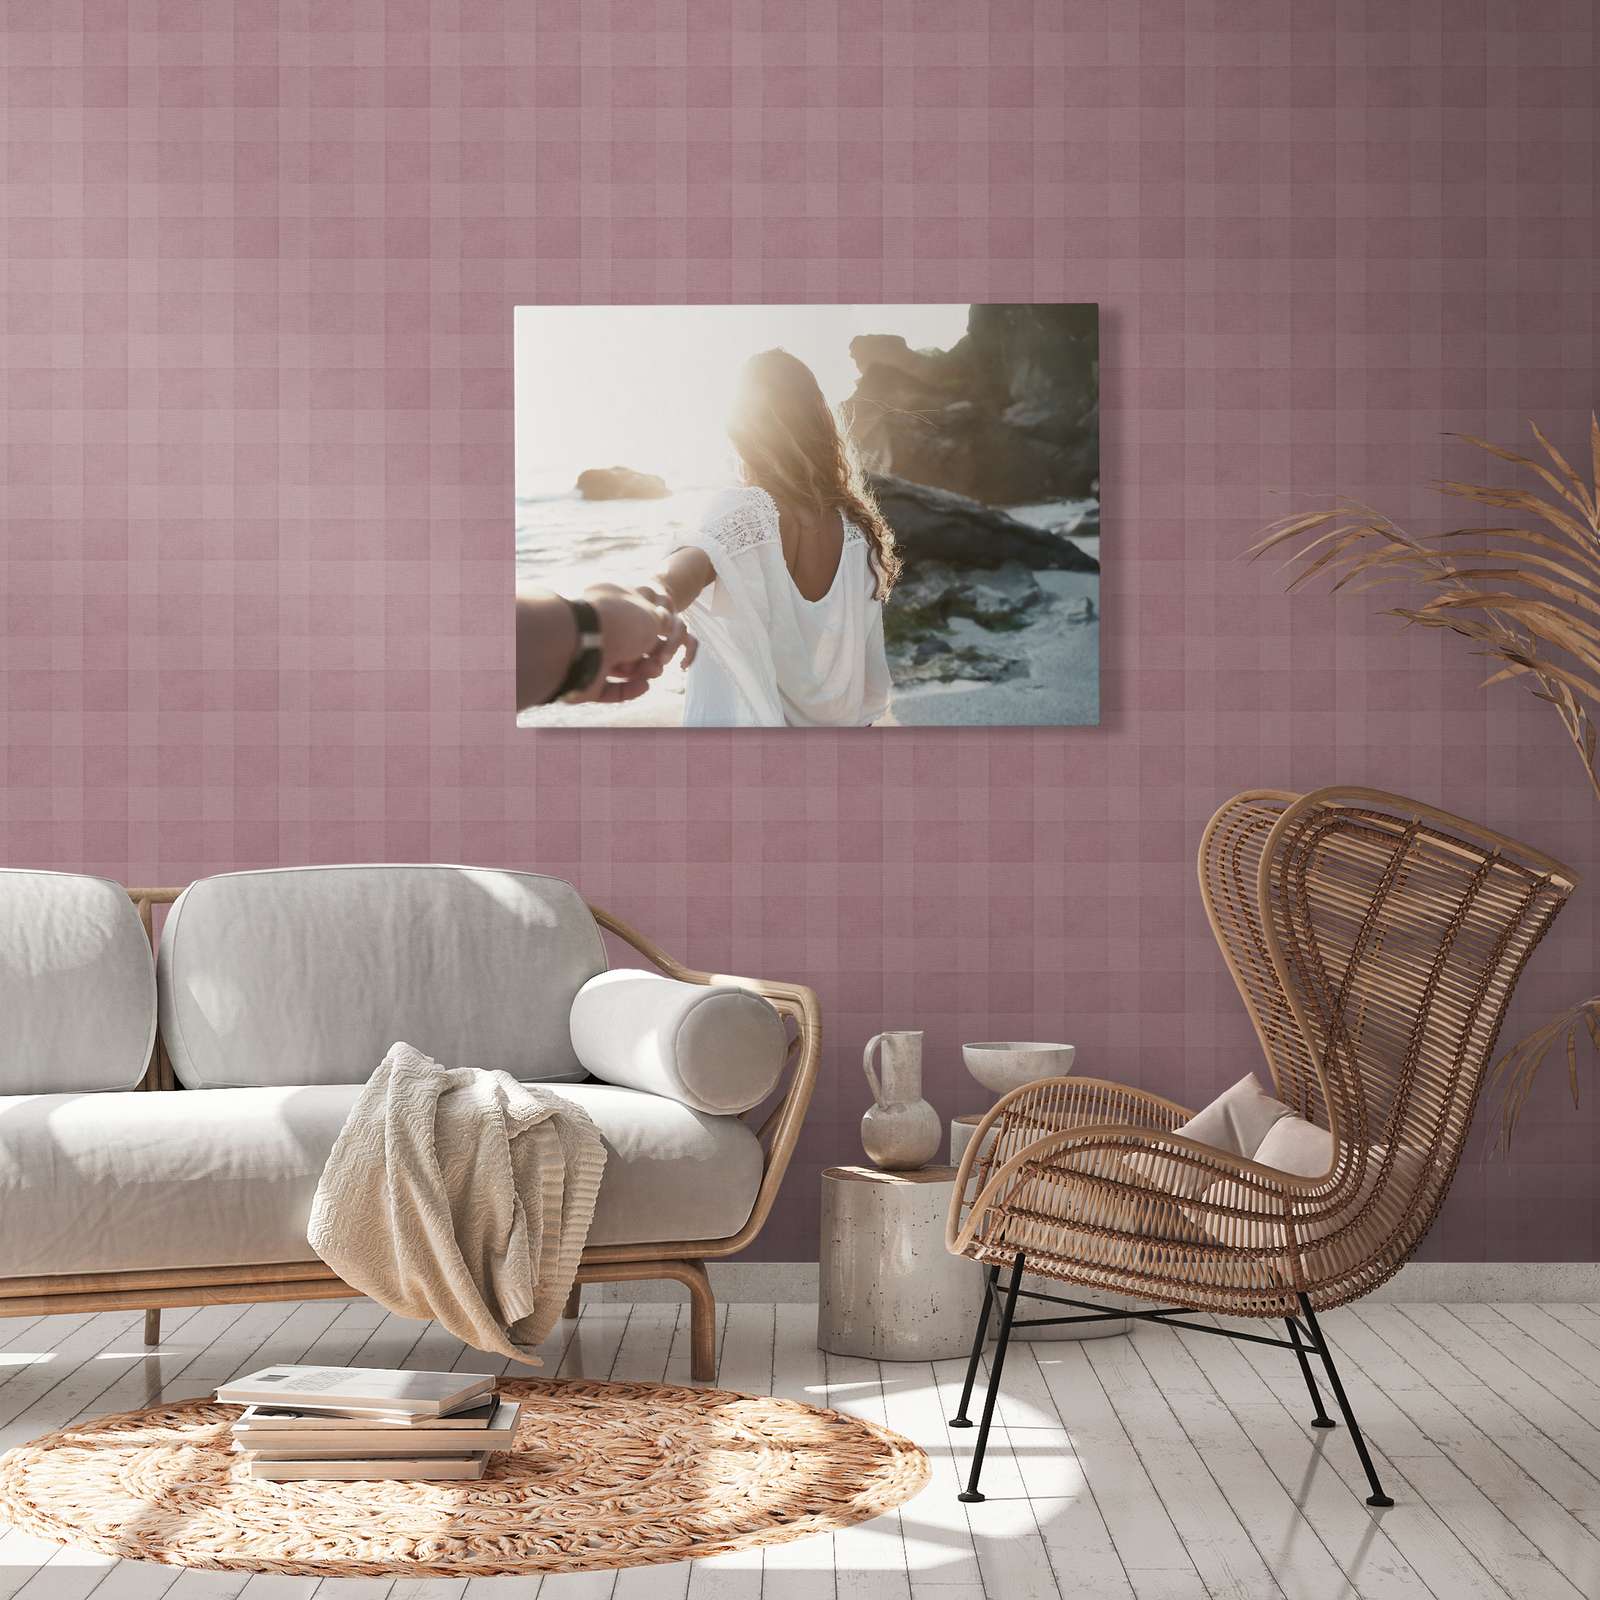             Papel pintado a cuadros con aspecto de lino sin PVC - Violeta
        